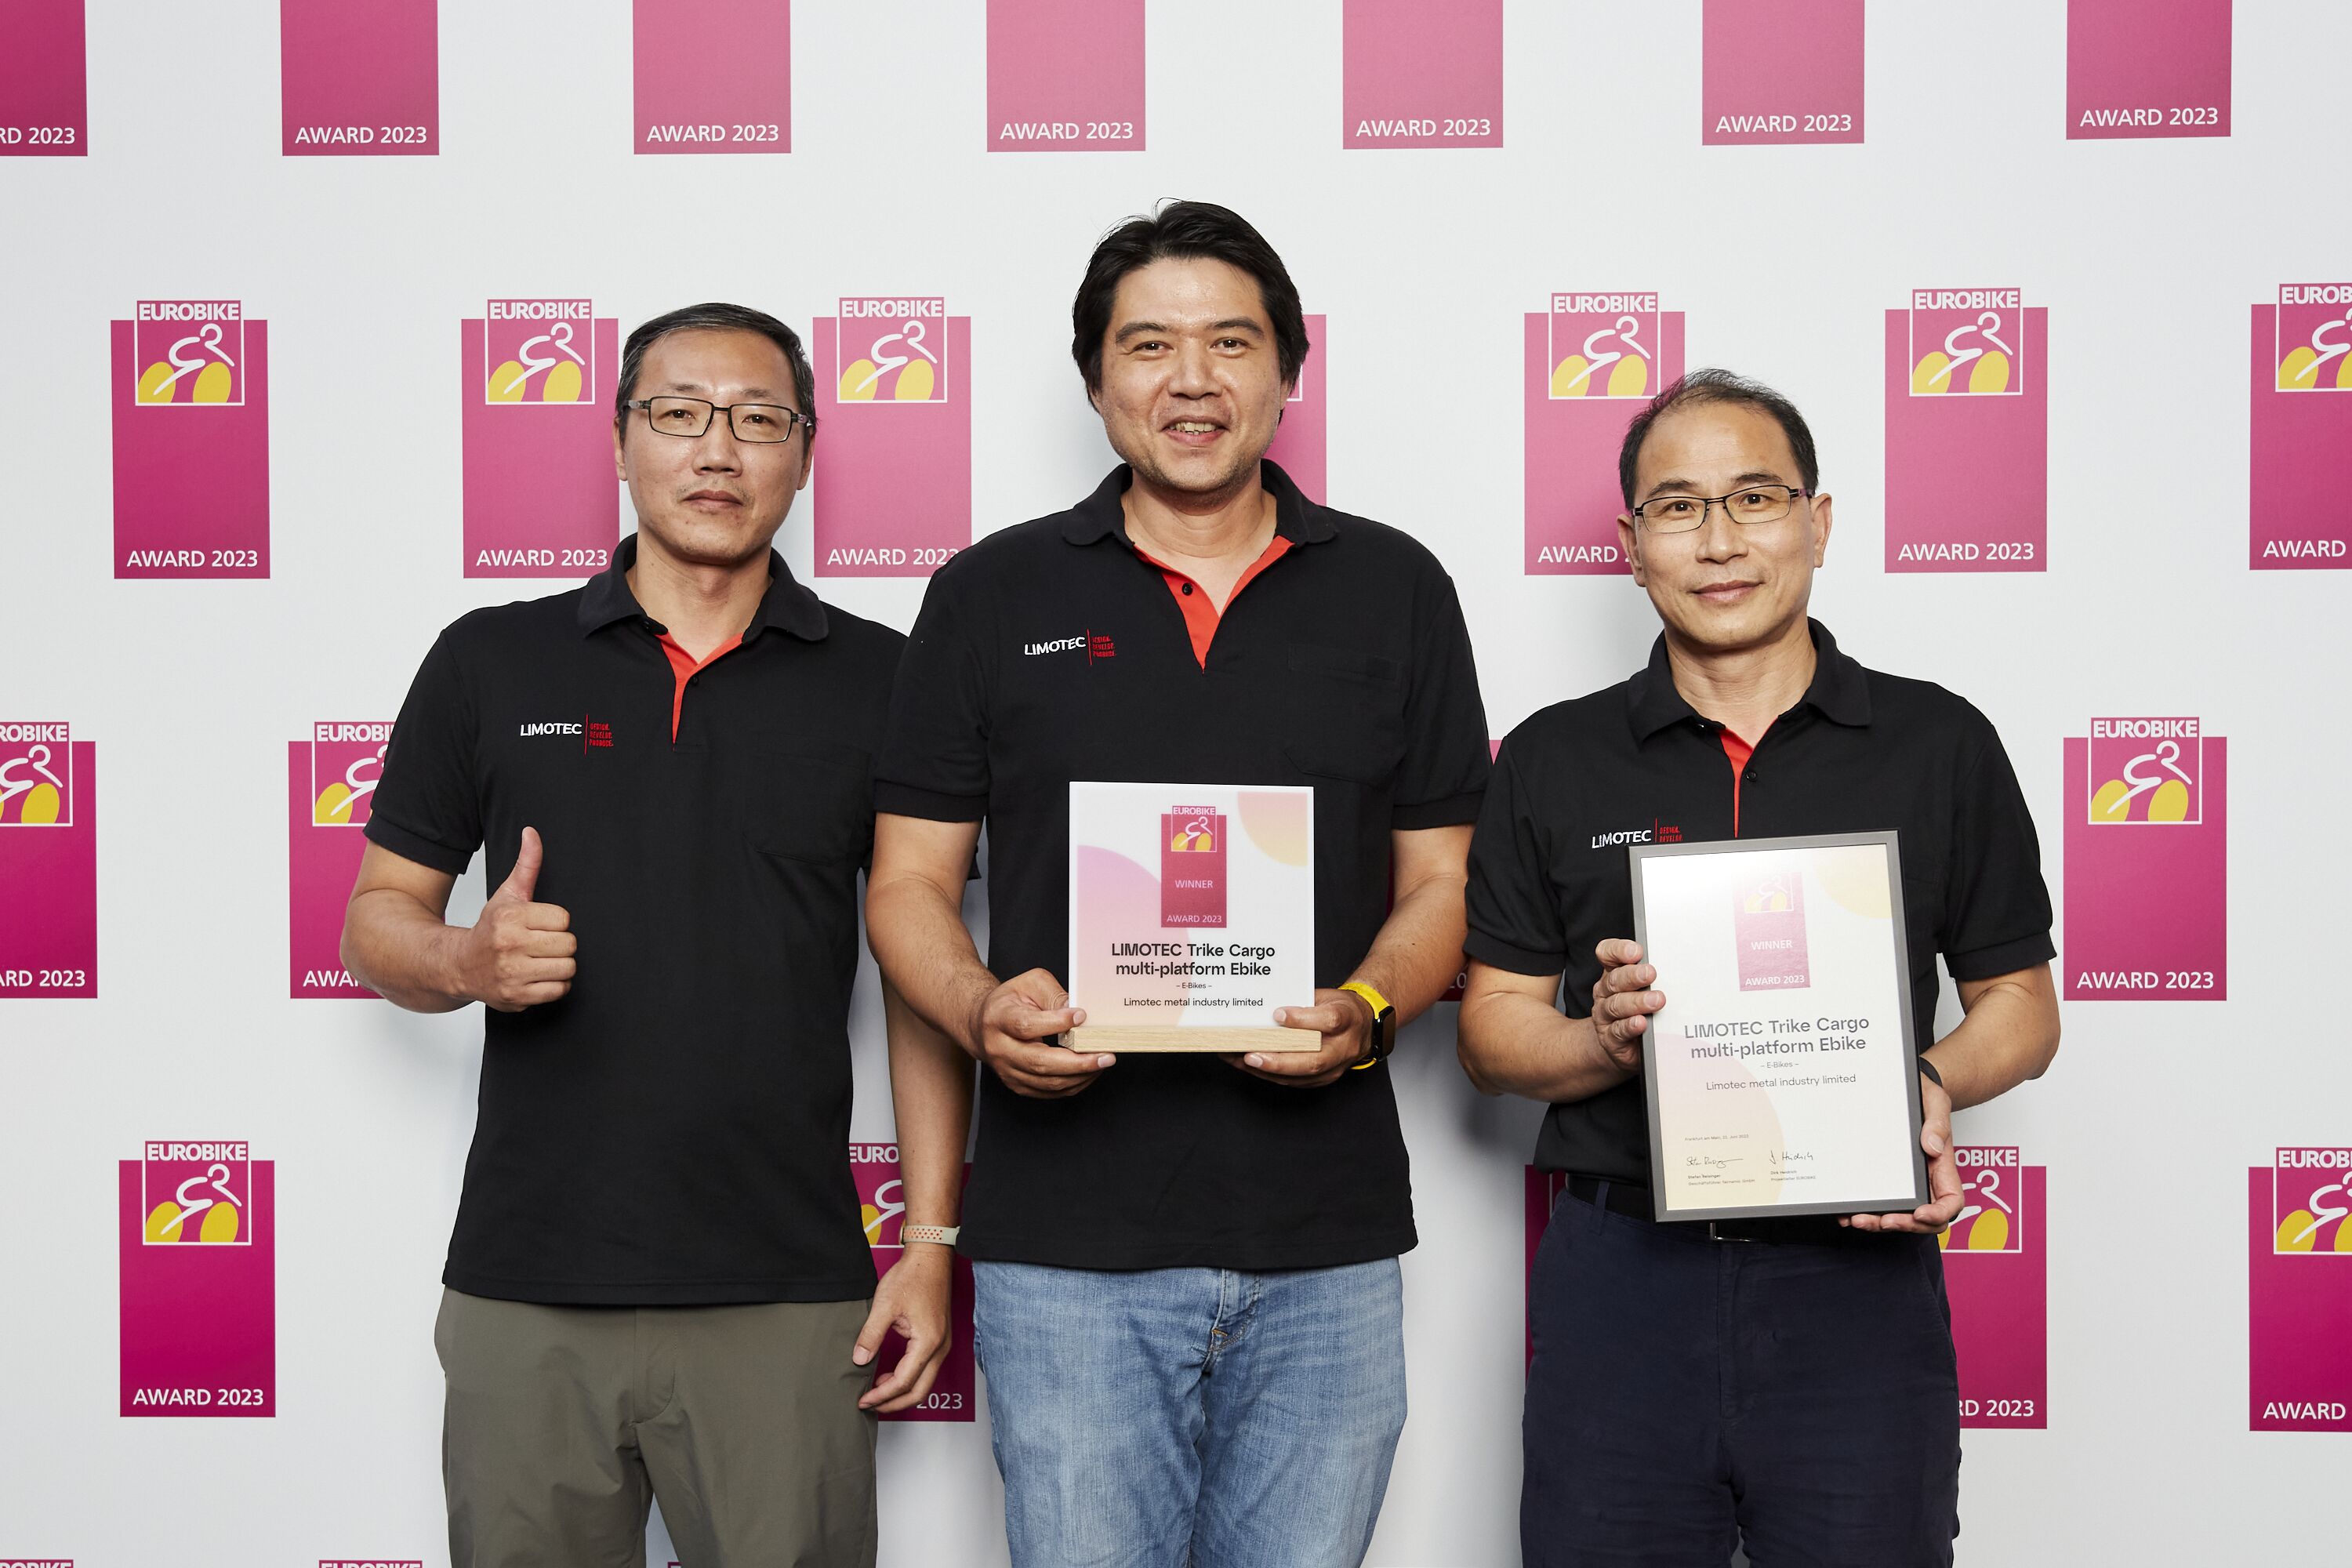 Gewinner Award: Limotec; Trike Cargo multi-platform Ebike